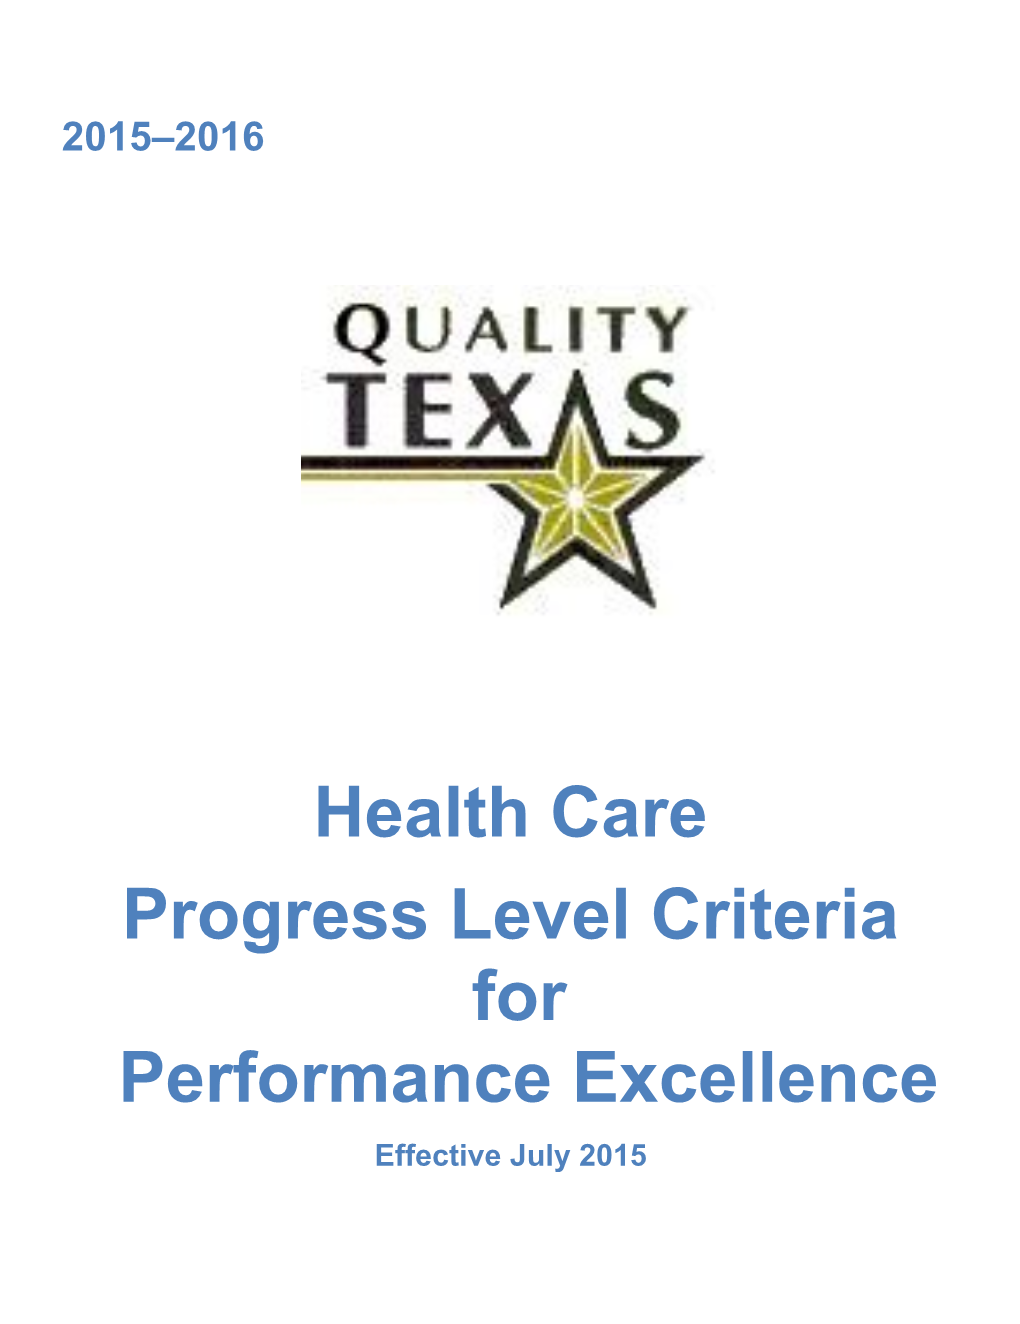 Progress Level Criteriafor Performance Excellence